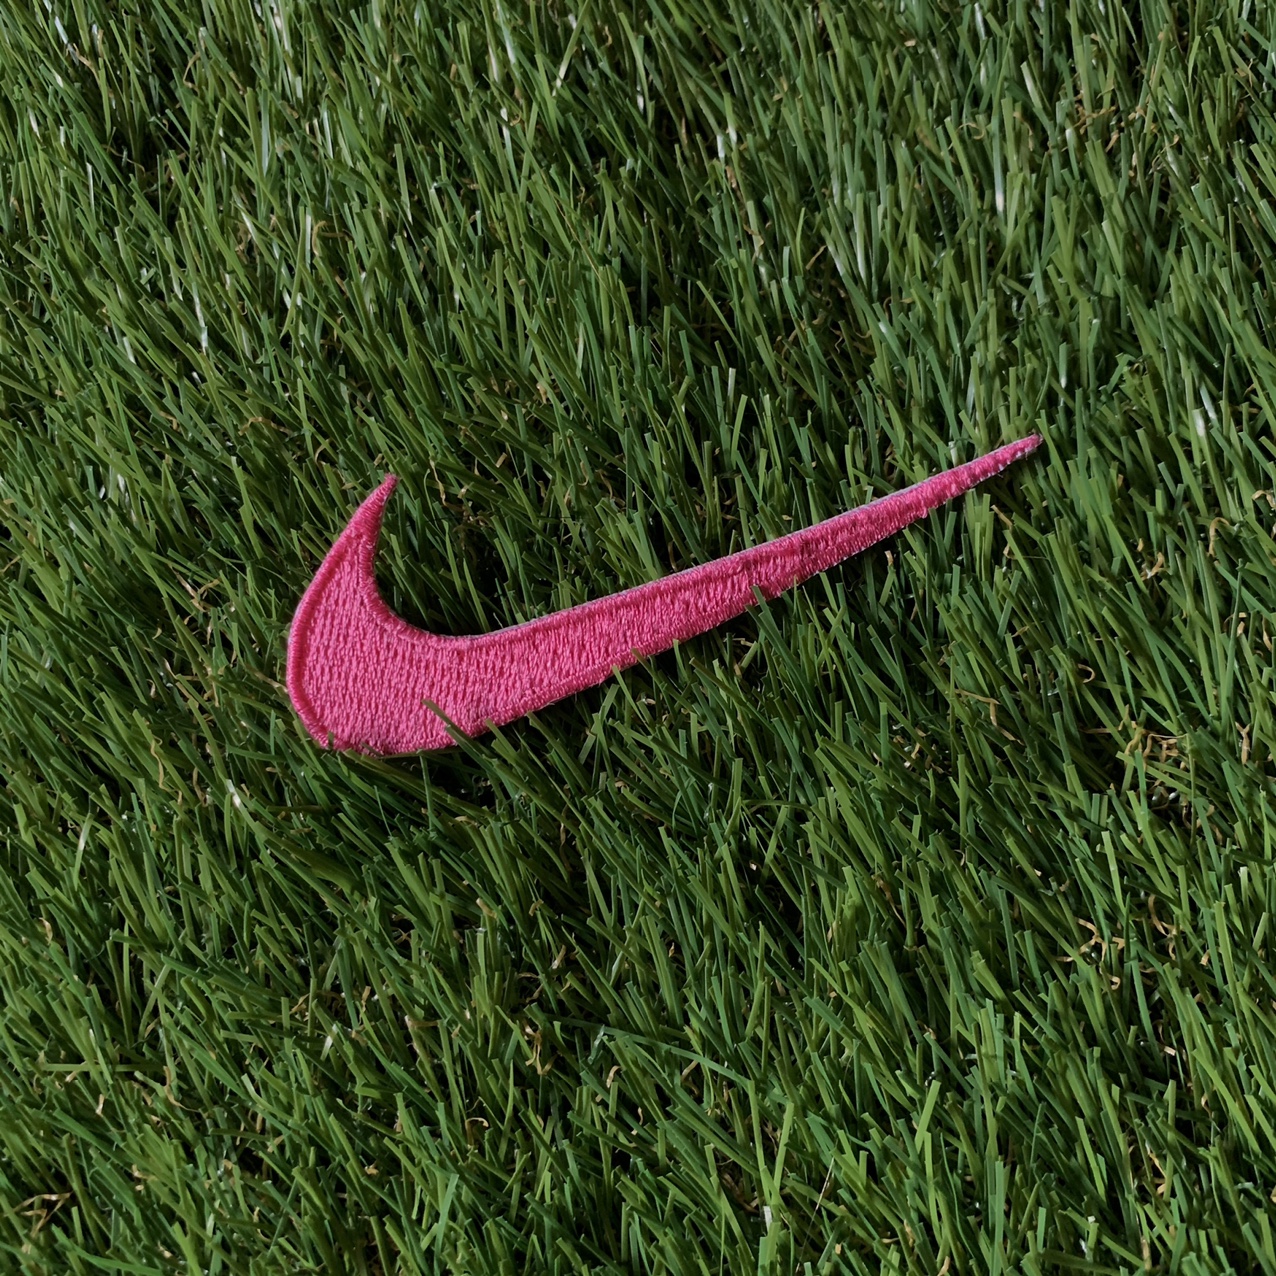 Pink Nike Pc Wallpapers